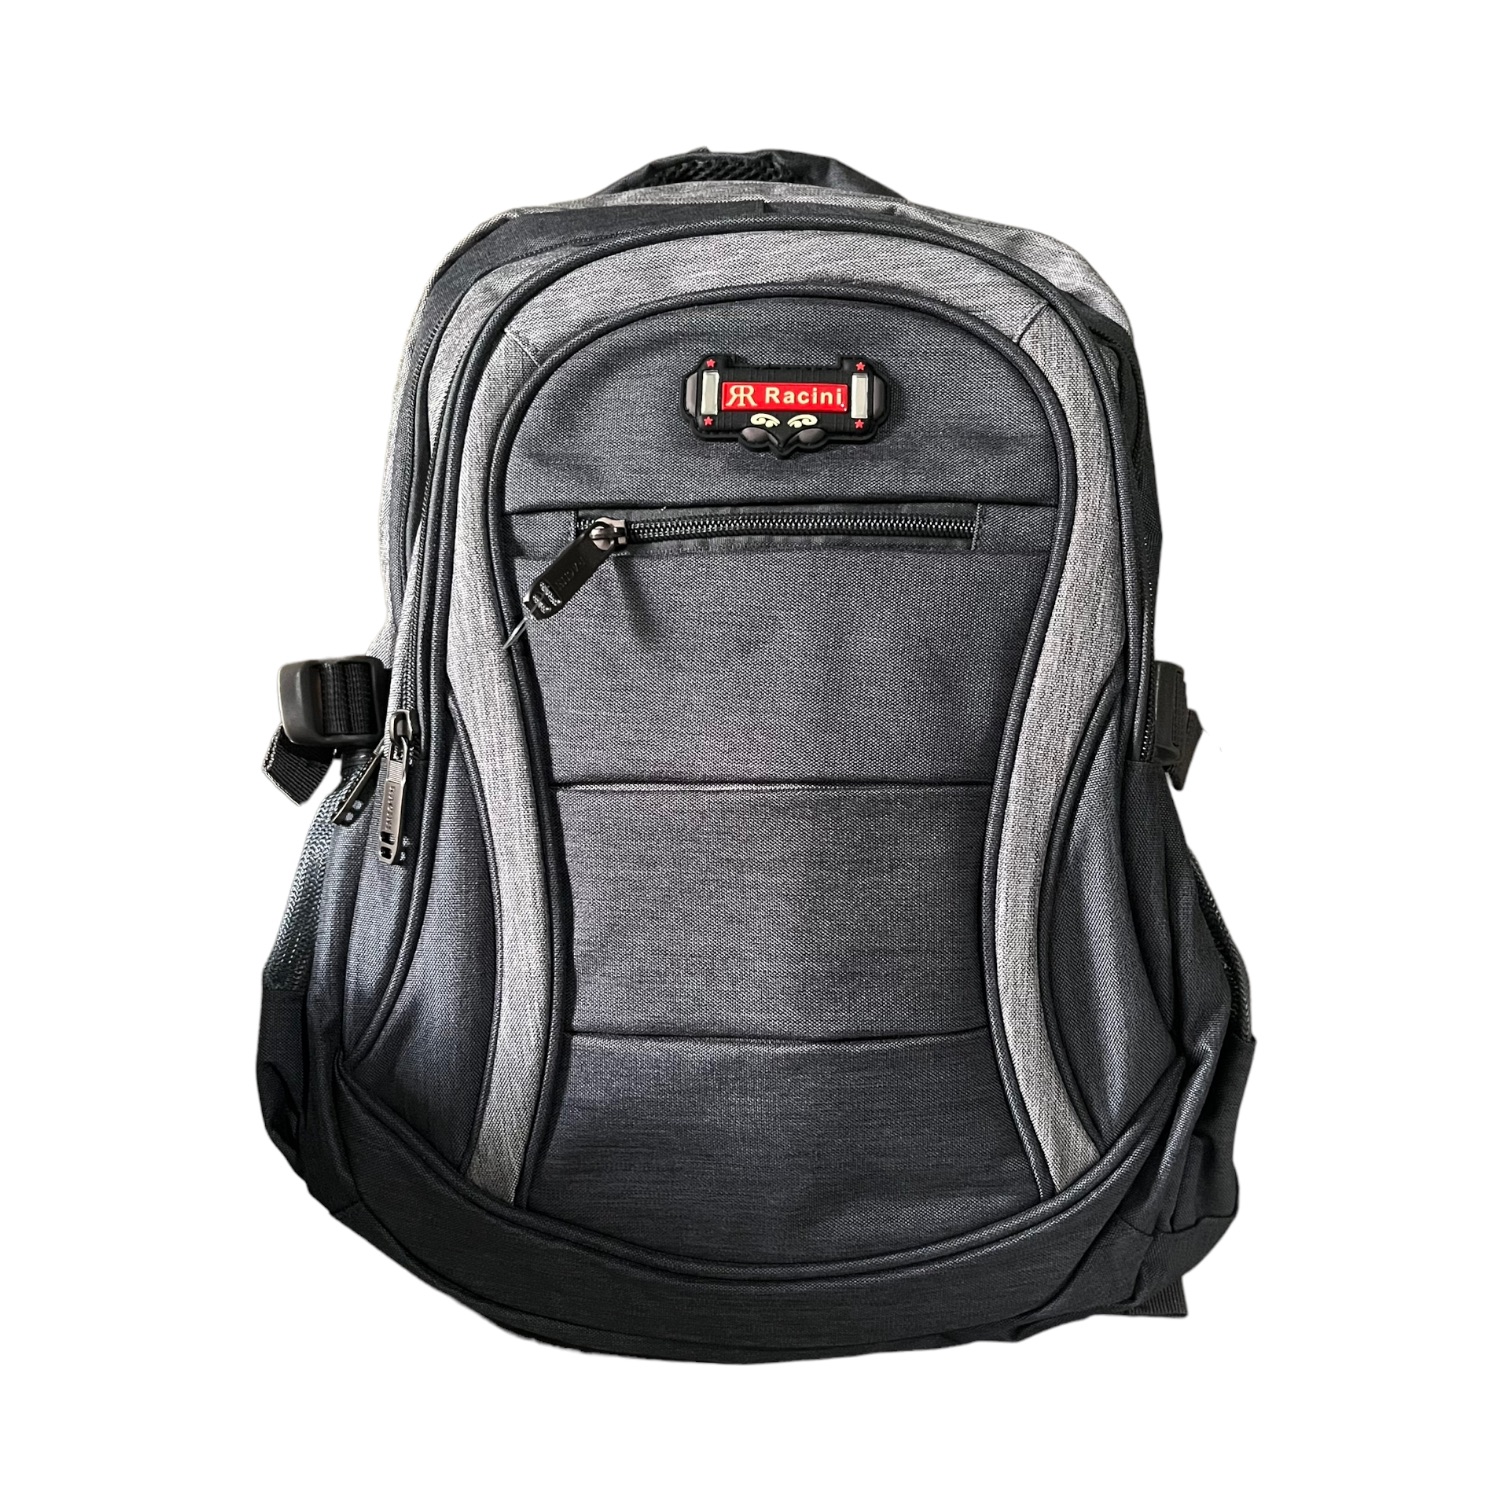 Racini Computer Backpack 55343 Black | Lazada PH